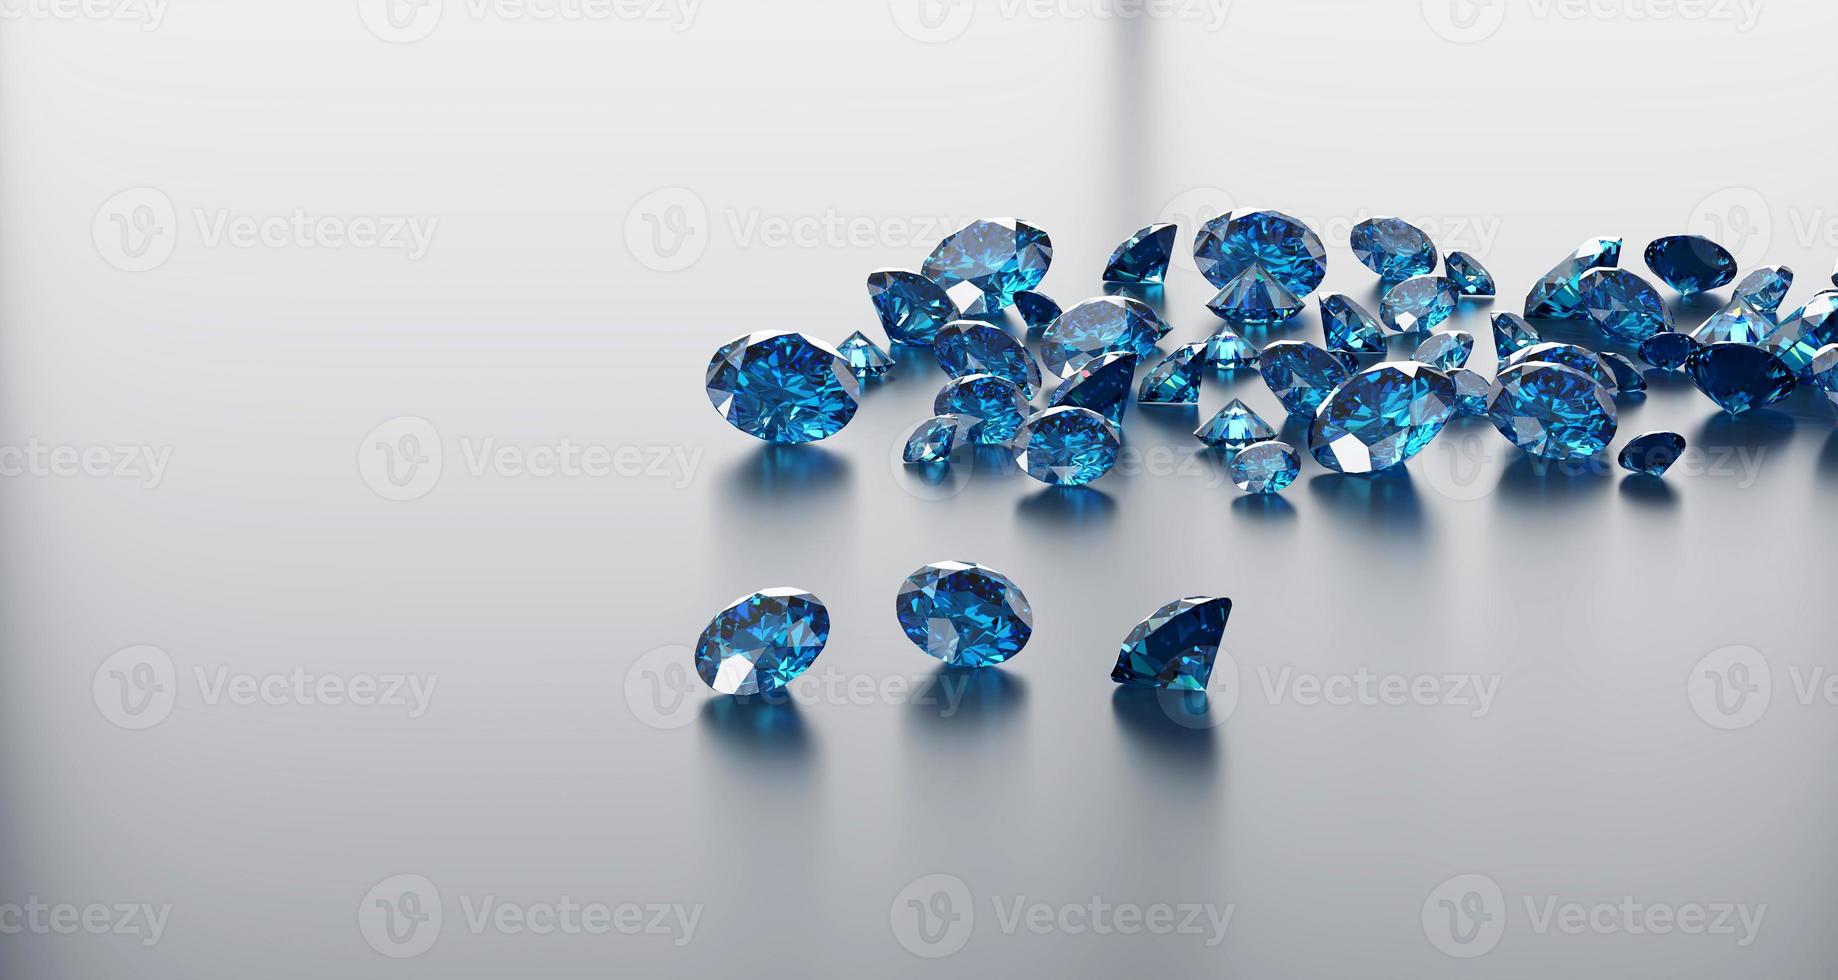 grupp av blå diamant safir placerad på blank bakgrund 3D-rendering foto